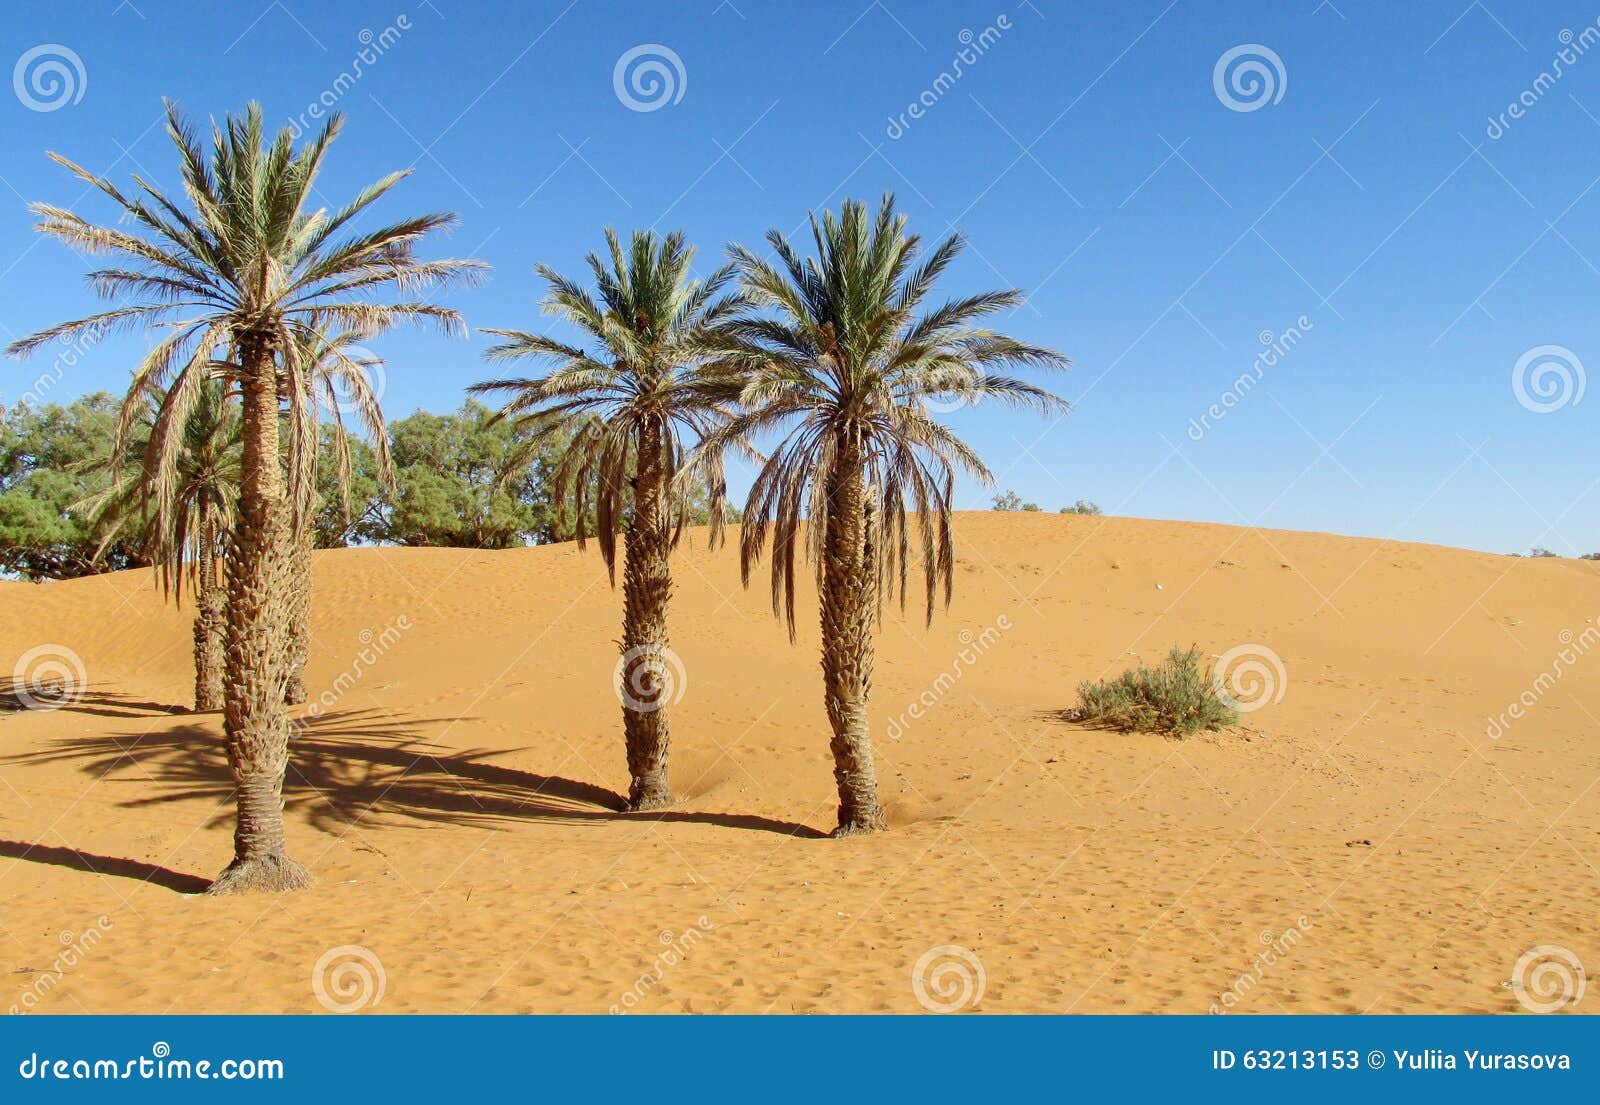 dating palm desert ca